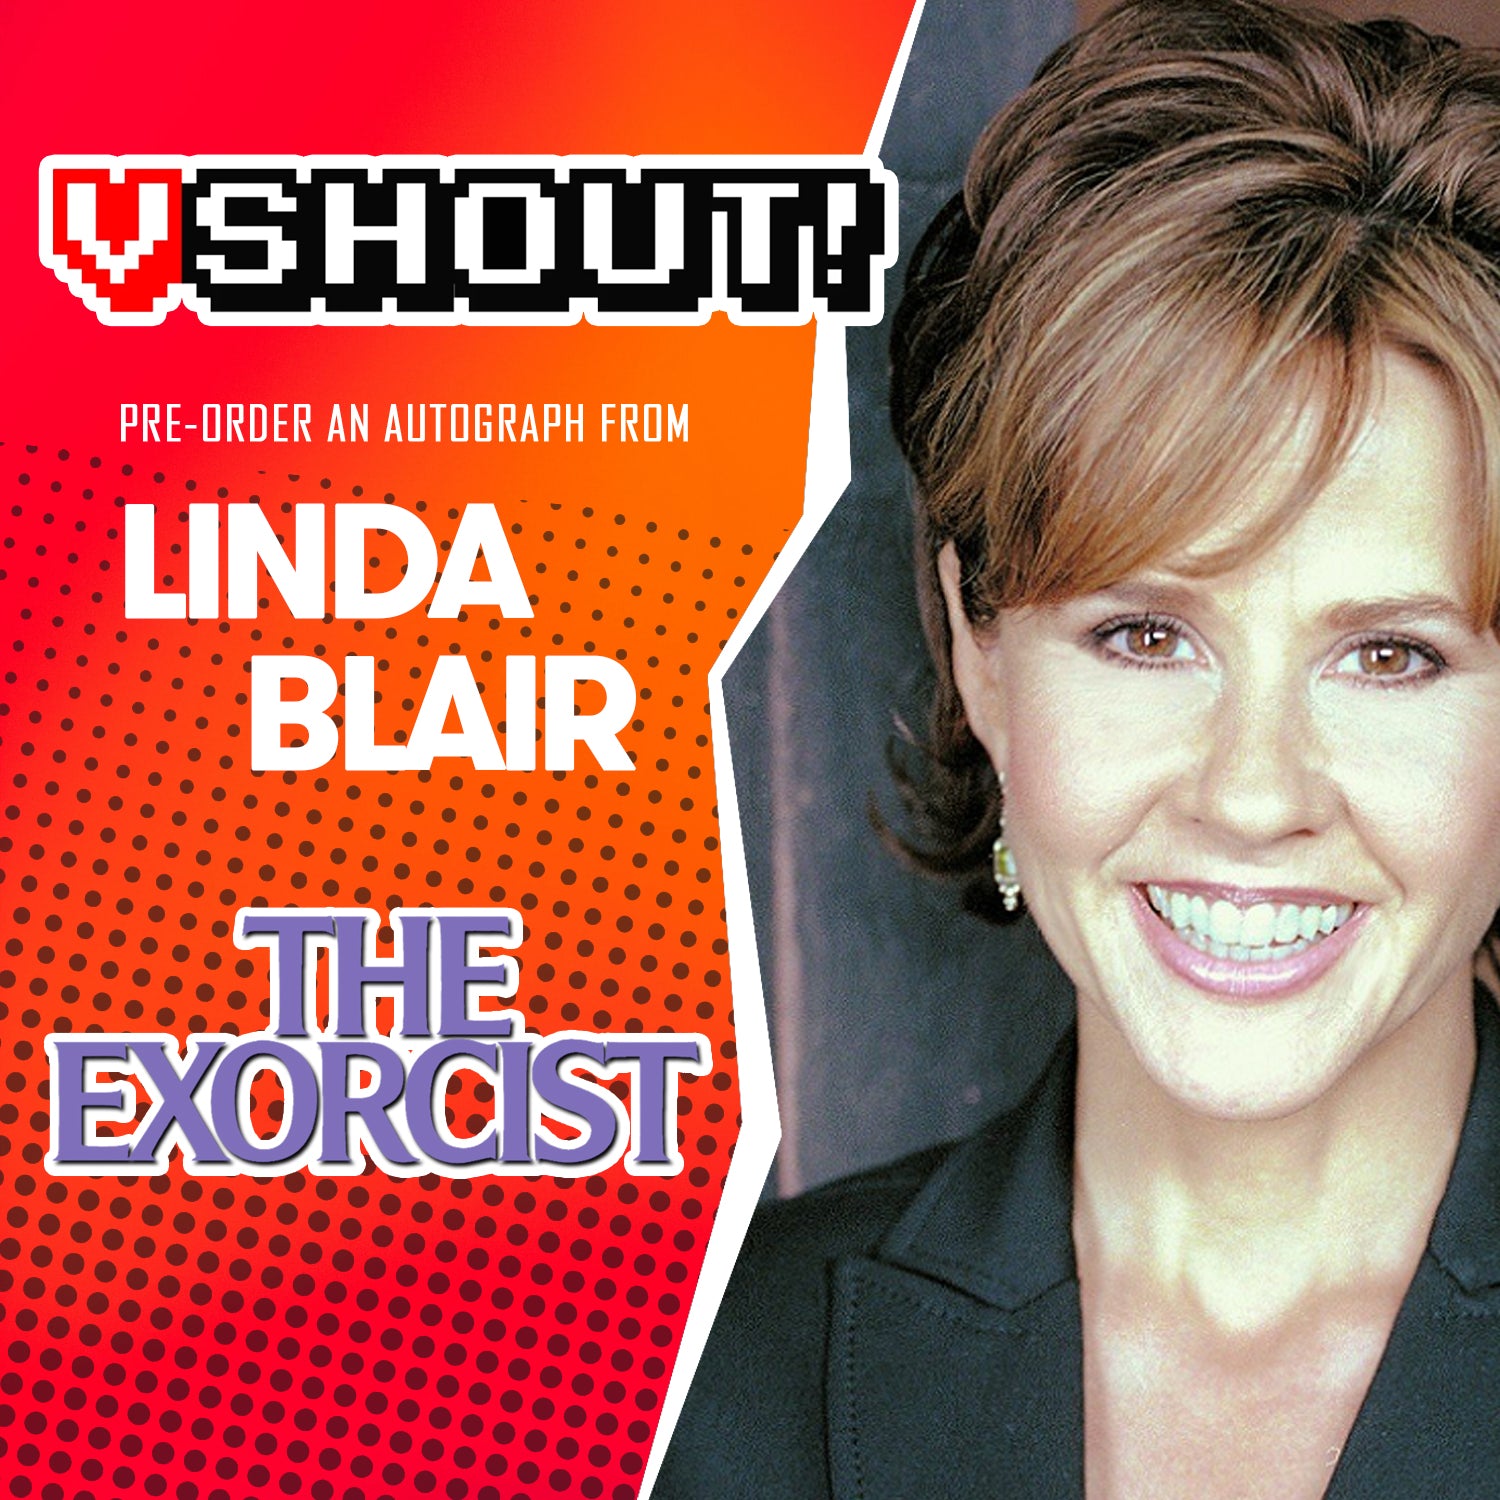 CLOSED Linda Blair Official vSHOUT! Autograph Pre-Order